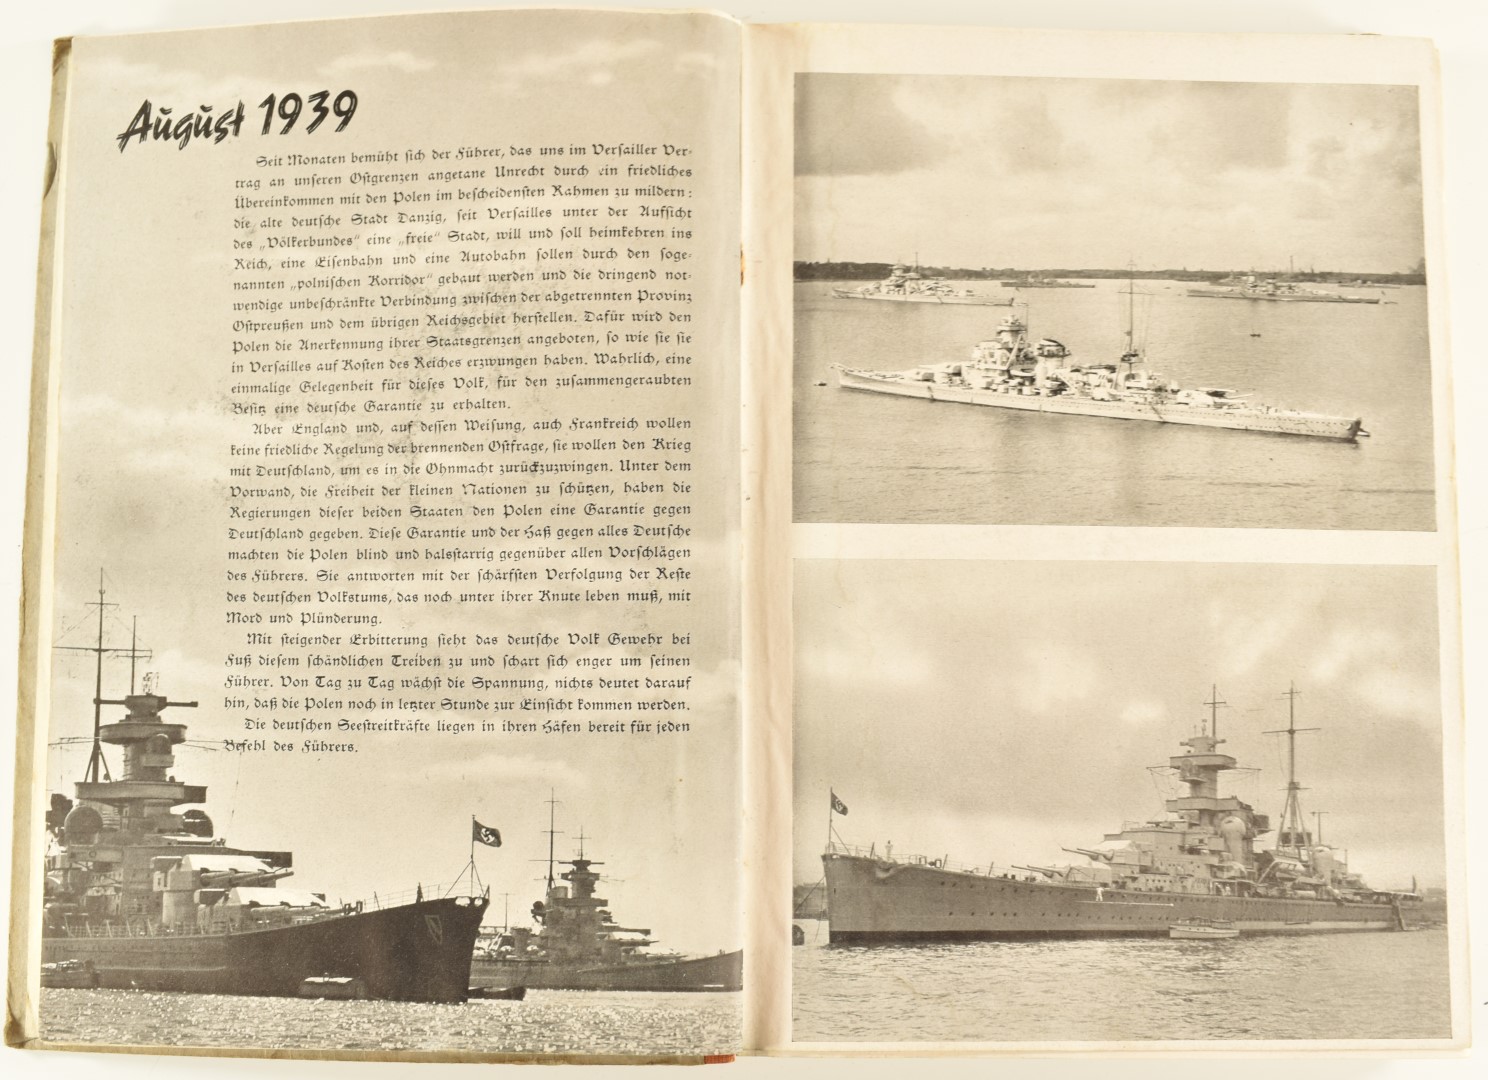 WW2 German naval book 'Kriegsmarine Am Feind' by Friedrich Meier, Berlin 1941 - Image 4 of 8